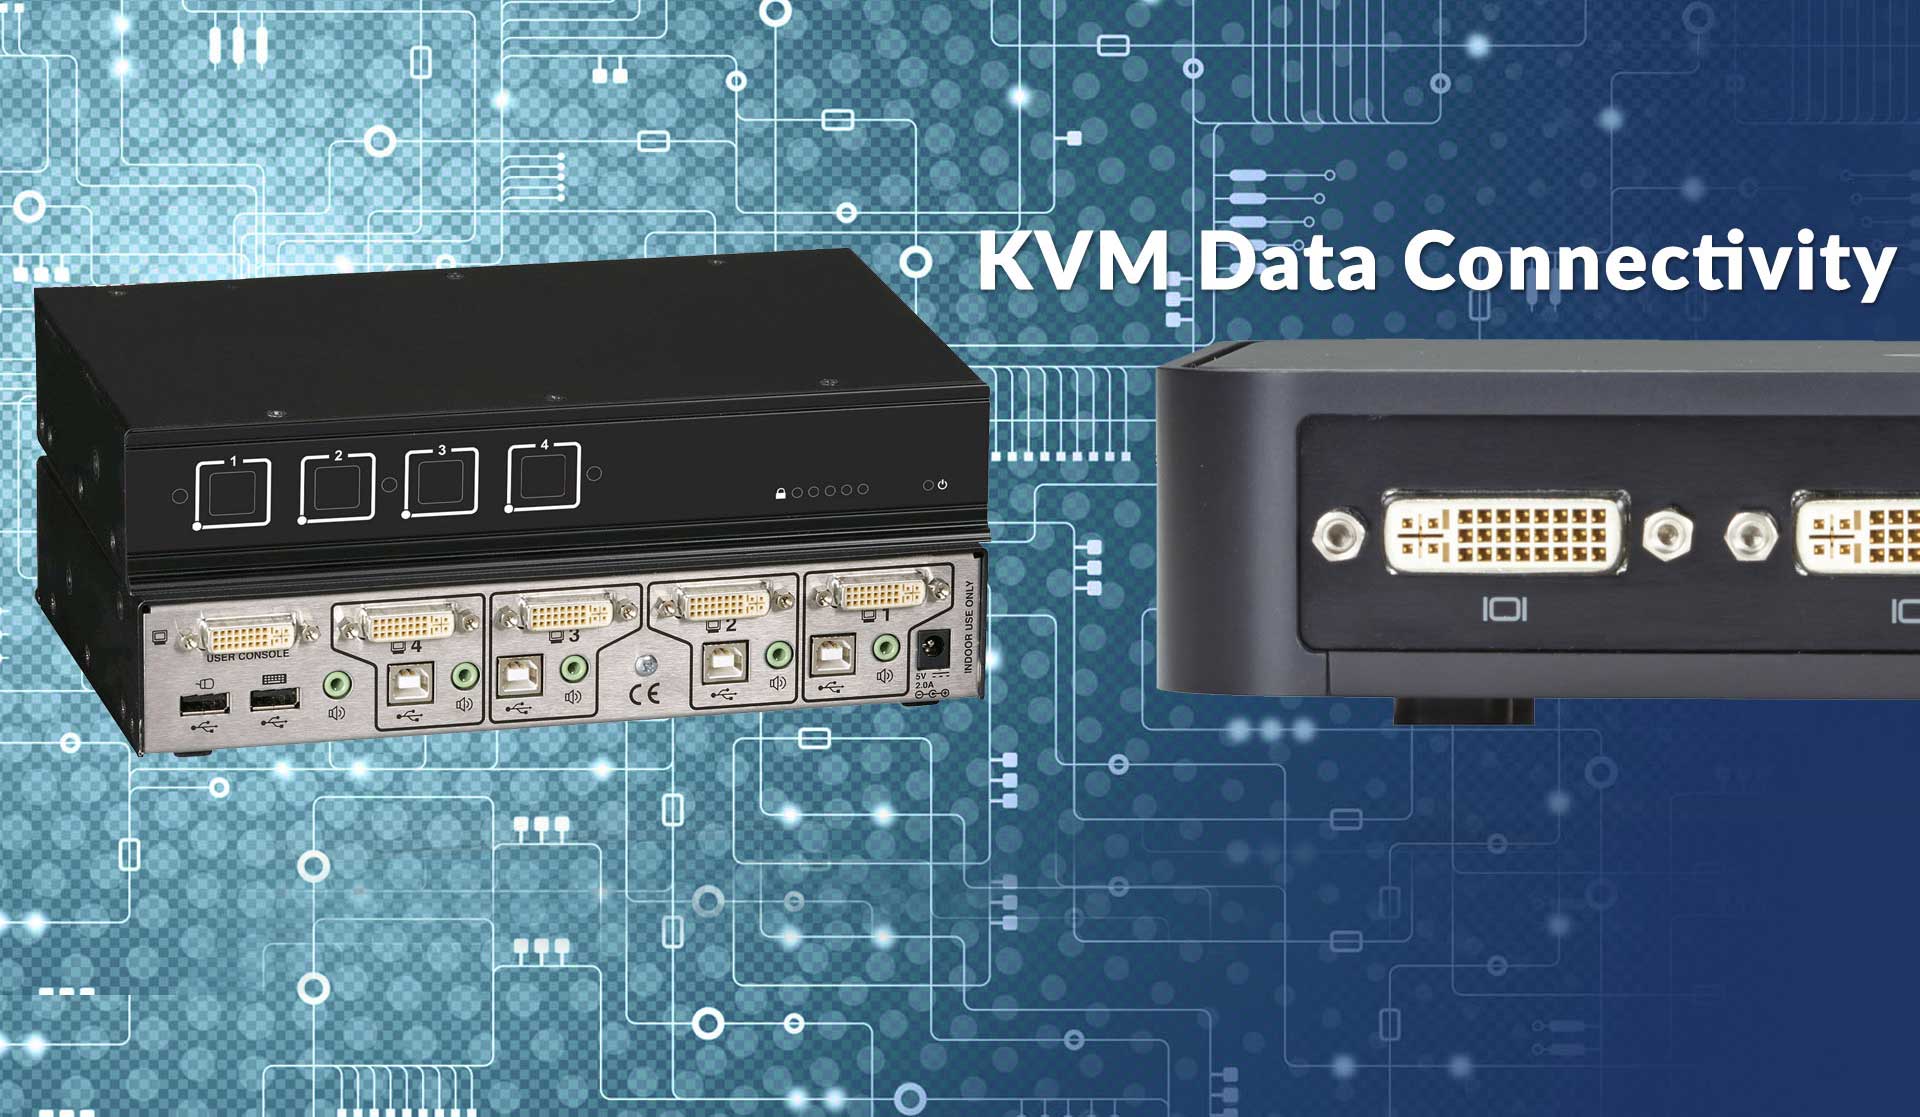 KVM Data Connectivity